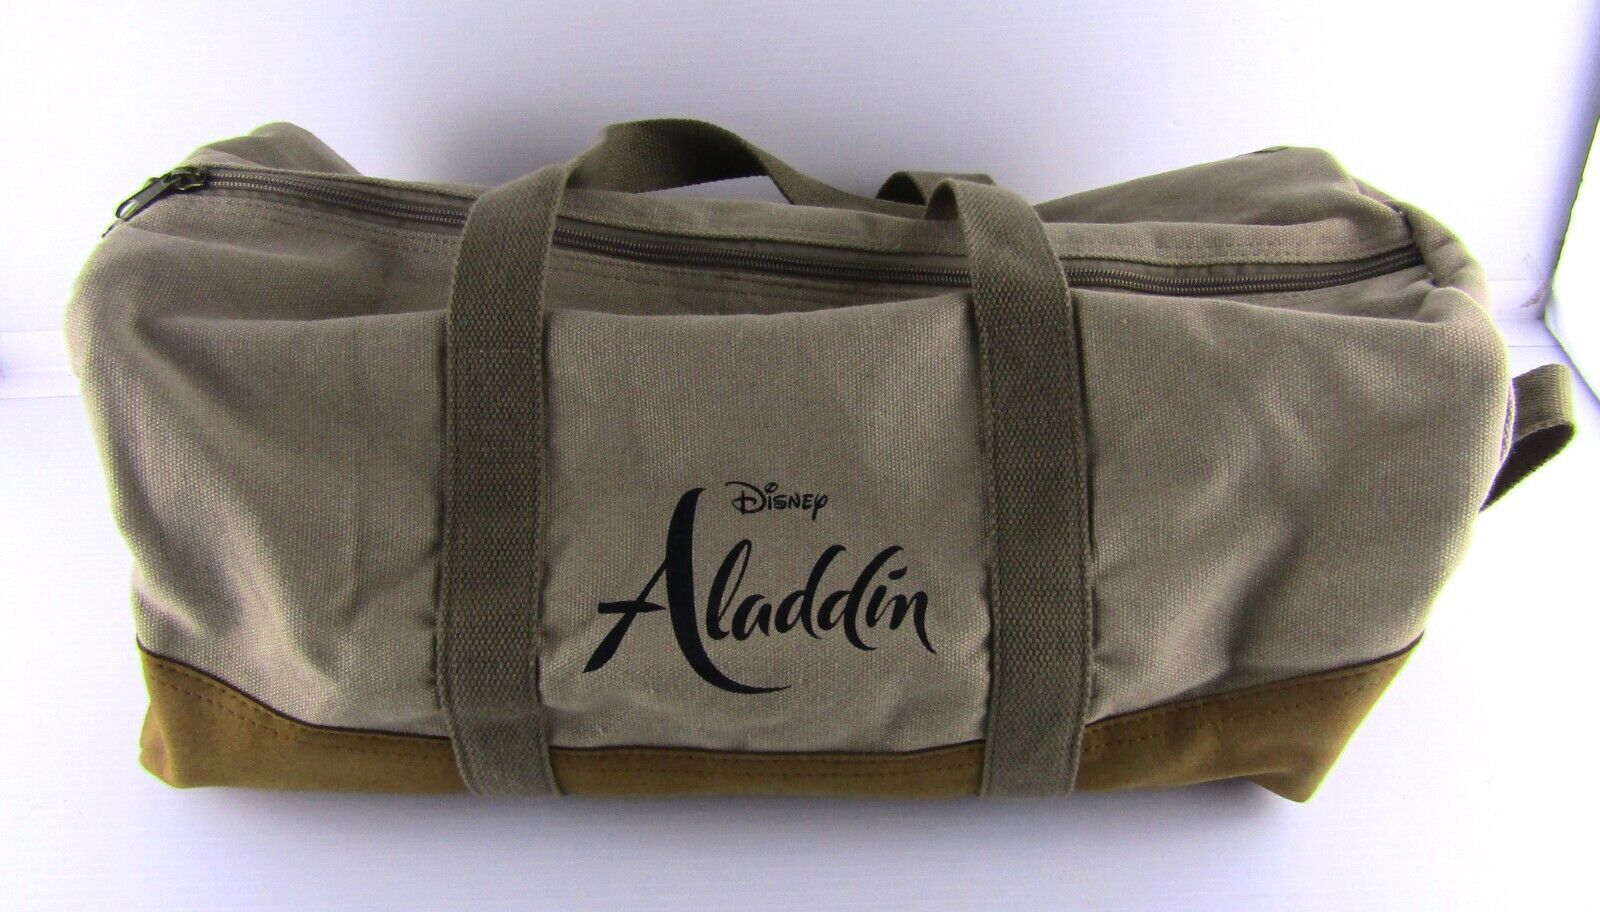 Disney Aladdin Tan Duffle Luggage Bag Imitation Leather and Canvas Tote Bag 2019 - $46.92